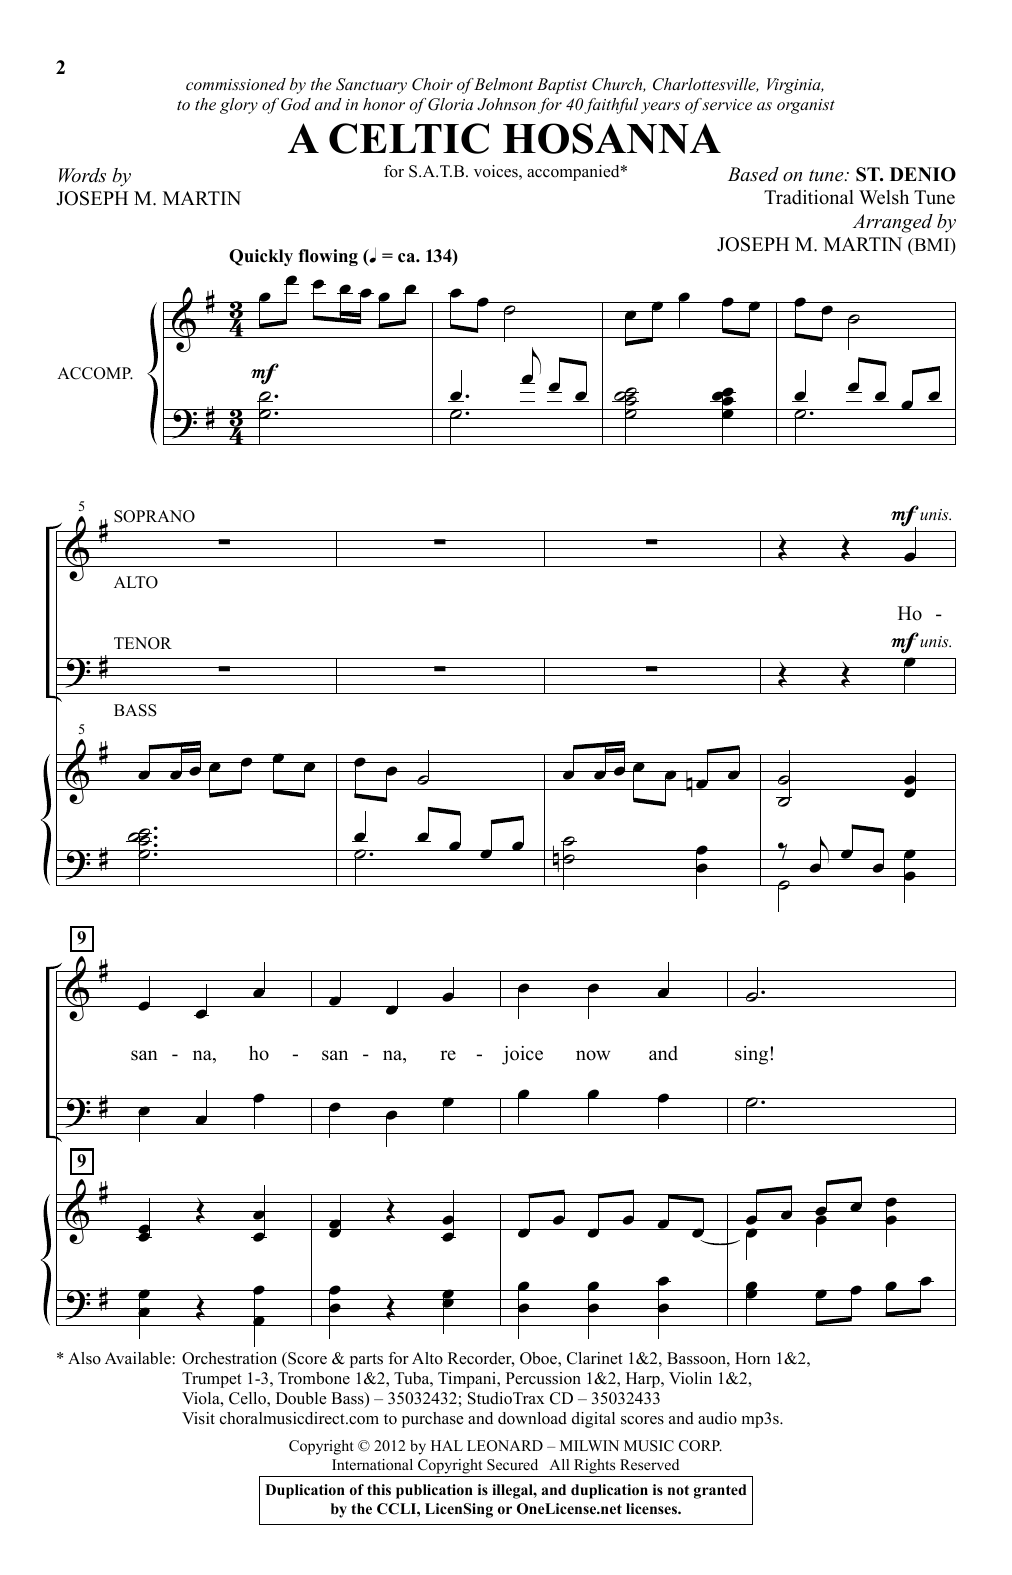 Joseph M. Martin A Celtic Hosanna Sheet Music Notes & Chords for SATB Choir - Download or Print PDF